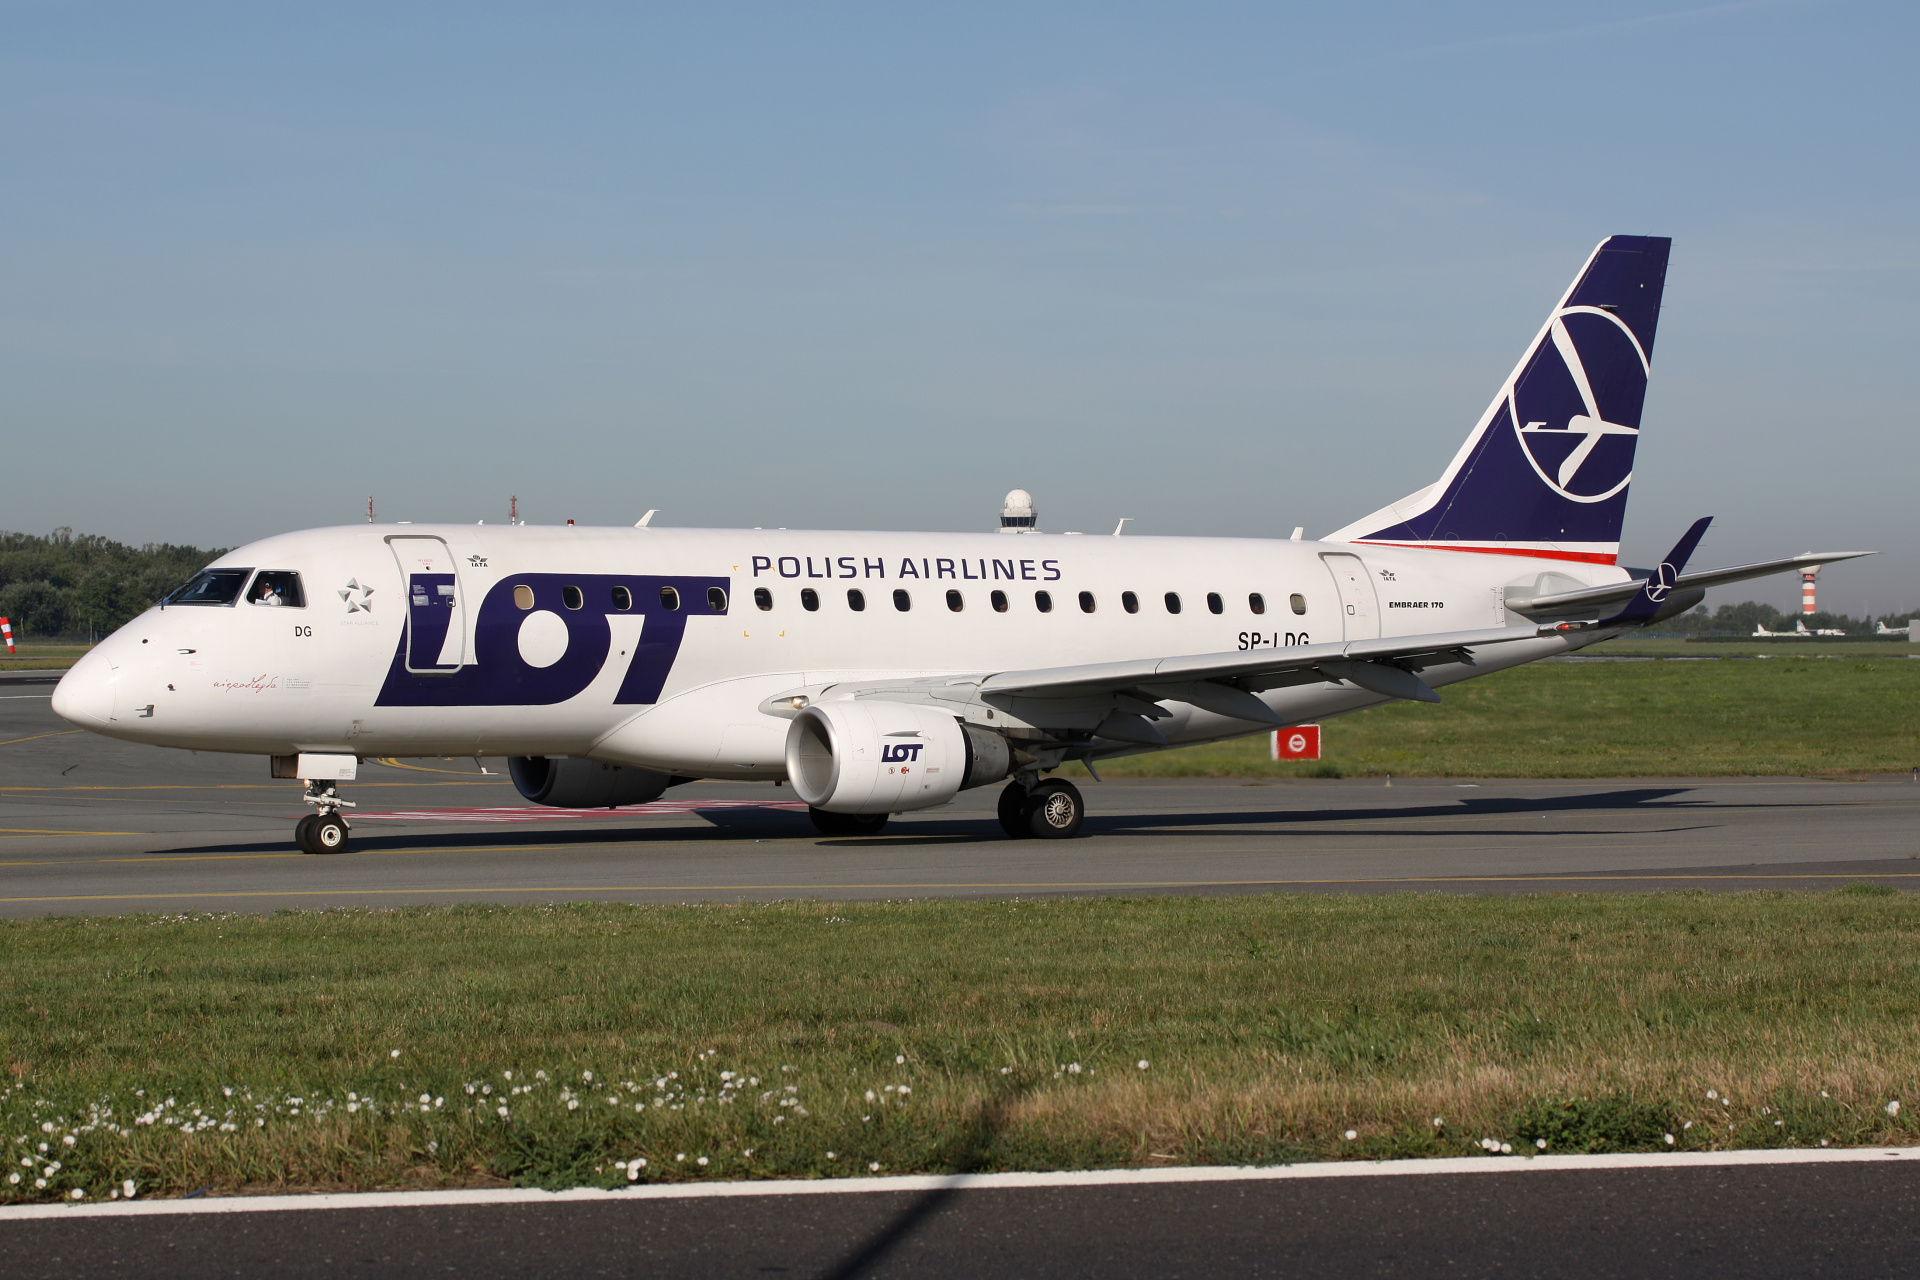 SP-LDG (Niepodległa sticker) (Aircraft » EPWA Spotting » Embraer E170 » LOT Polish Airlines)